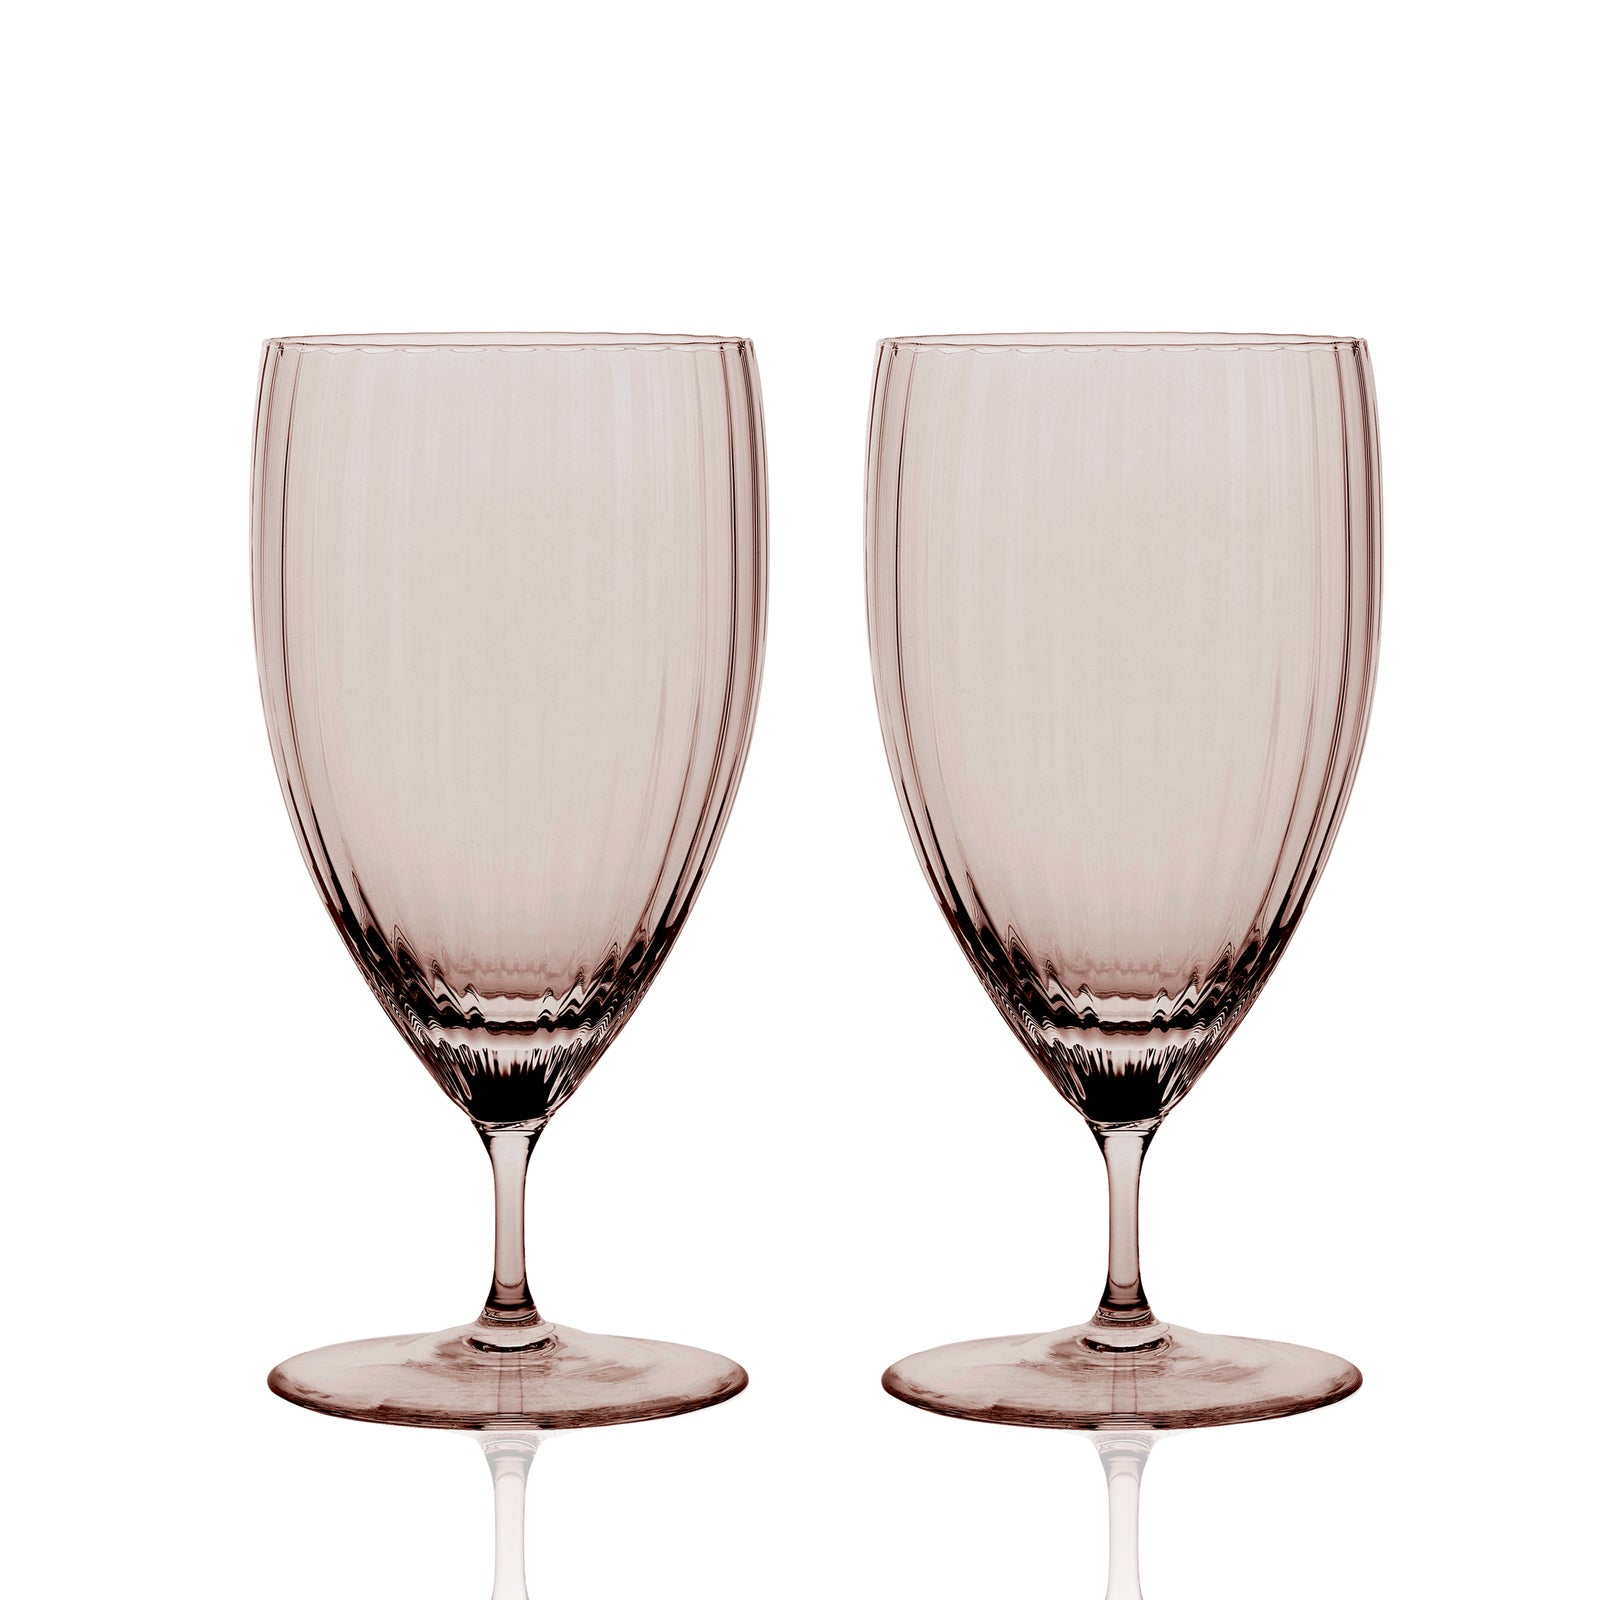 Caskata Cealia Coupe Glasses, Set of 2, Mouth-Blown Glass